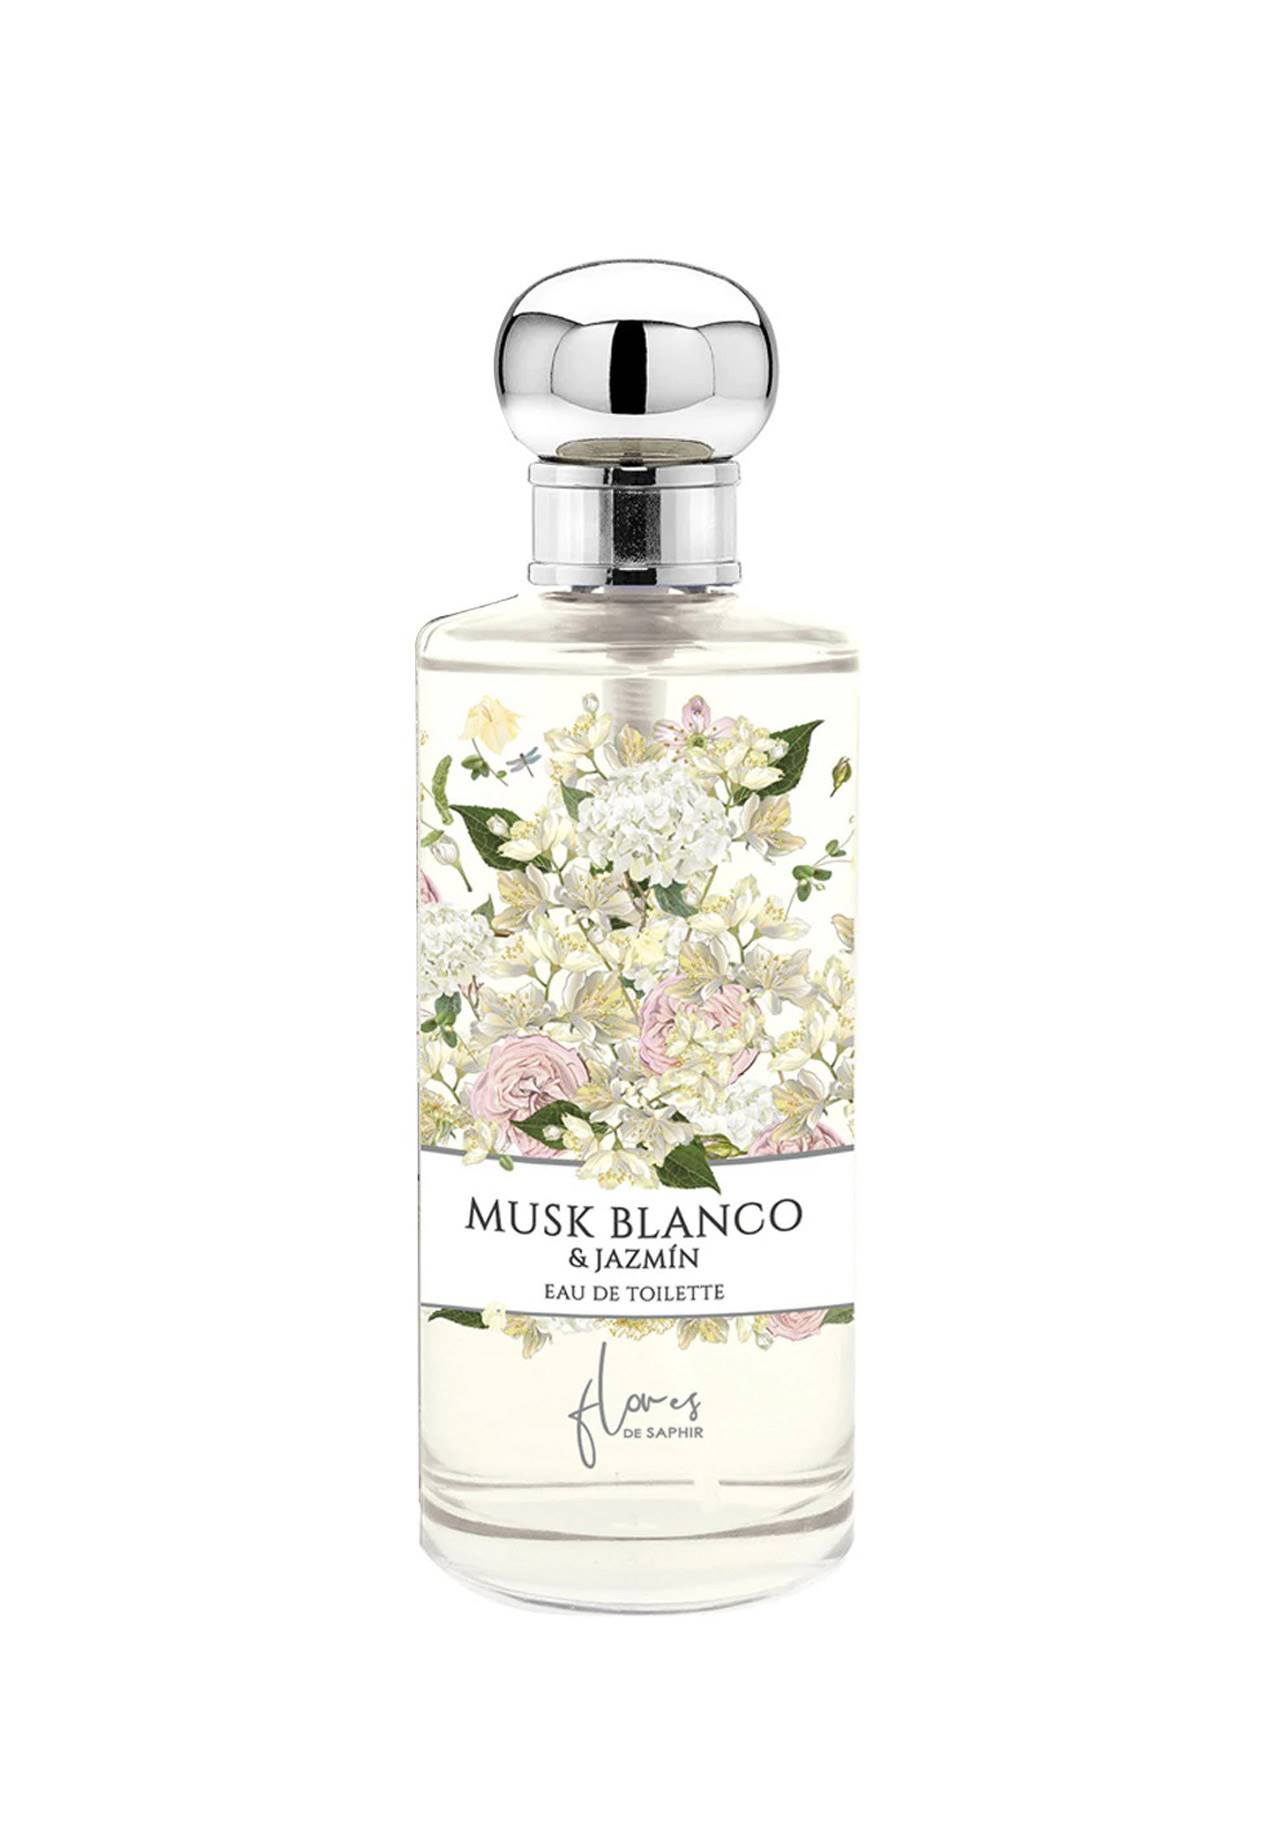 perfumes baratos que huelen a limpio Eau de toilette Musk y Jazmín Flores de Saphir, 9,95€